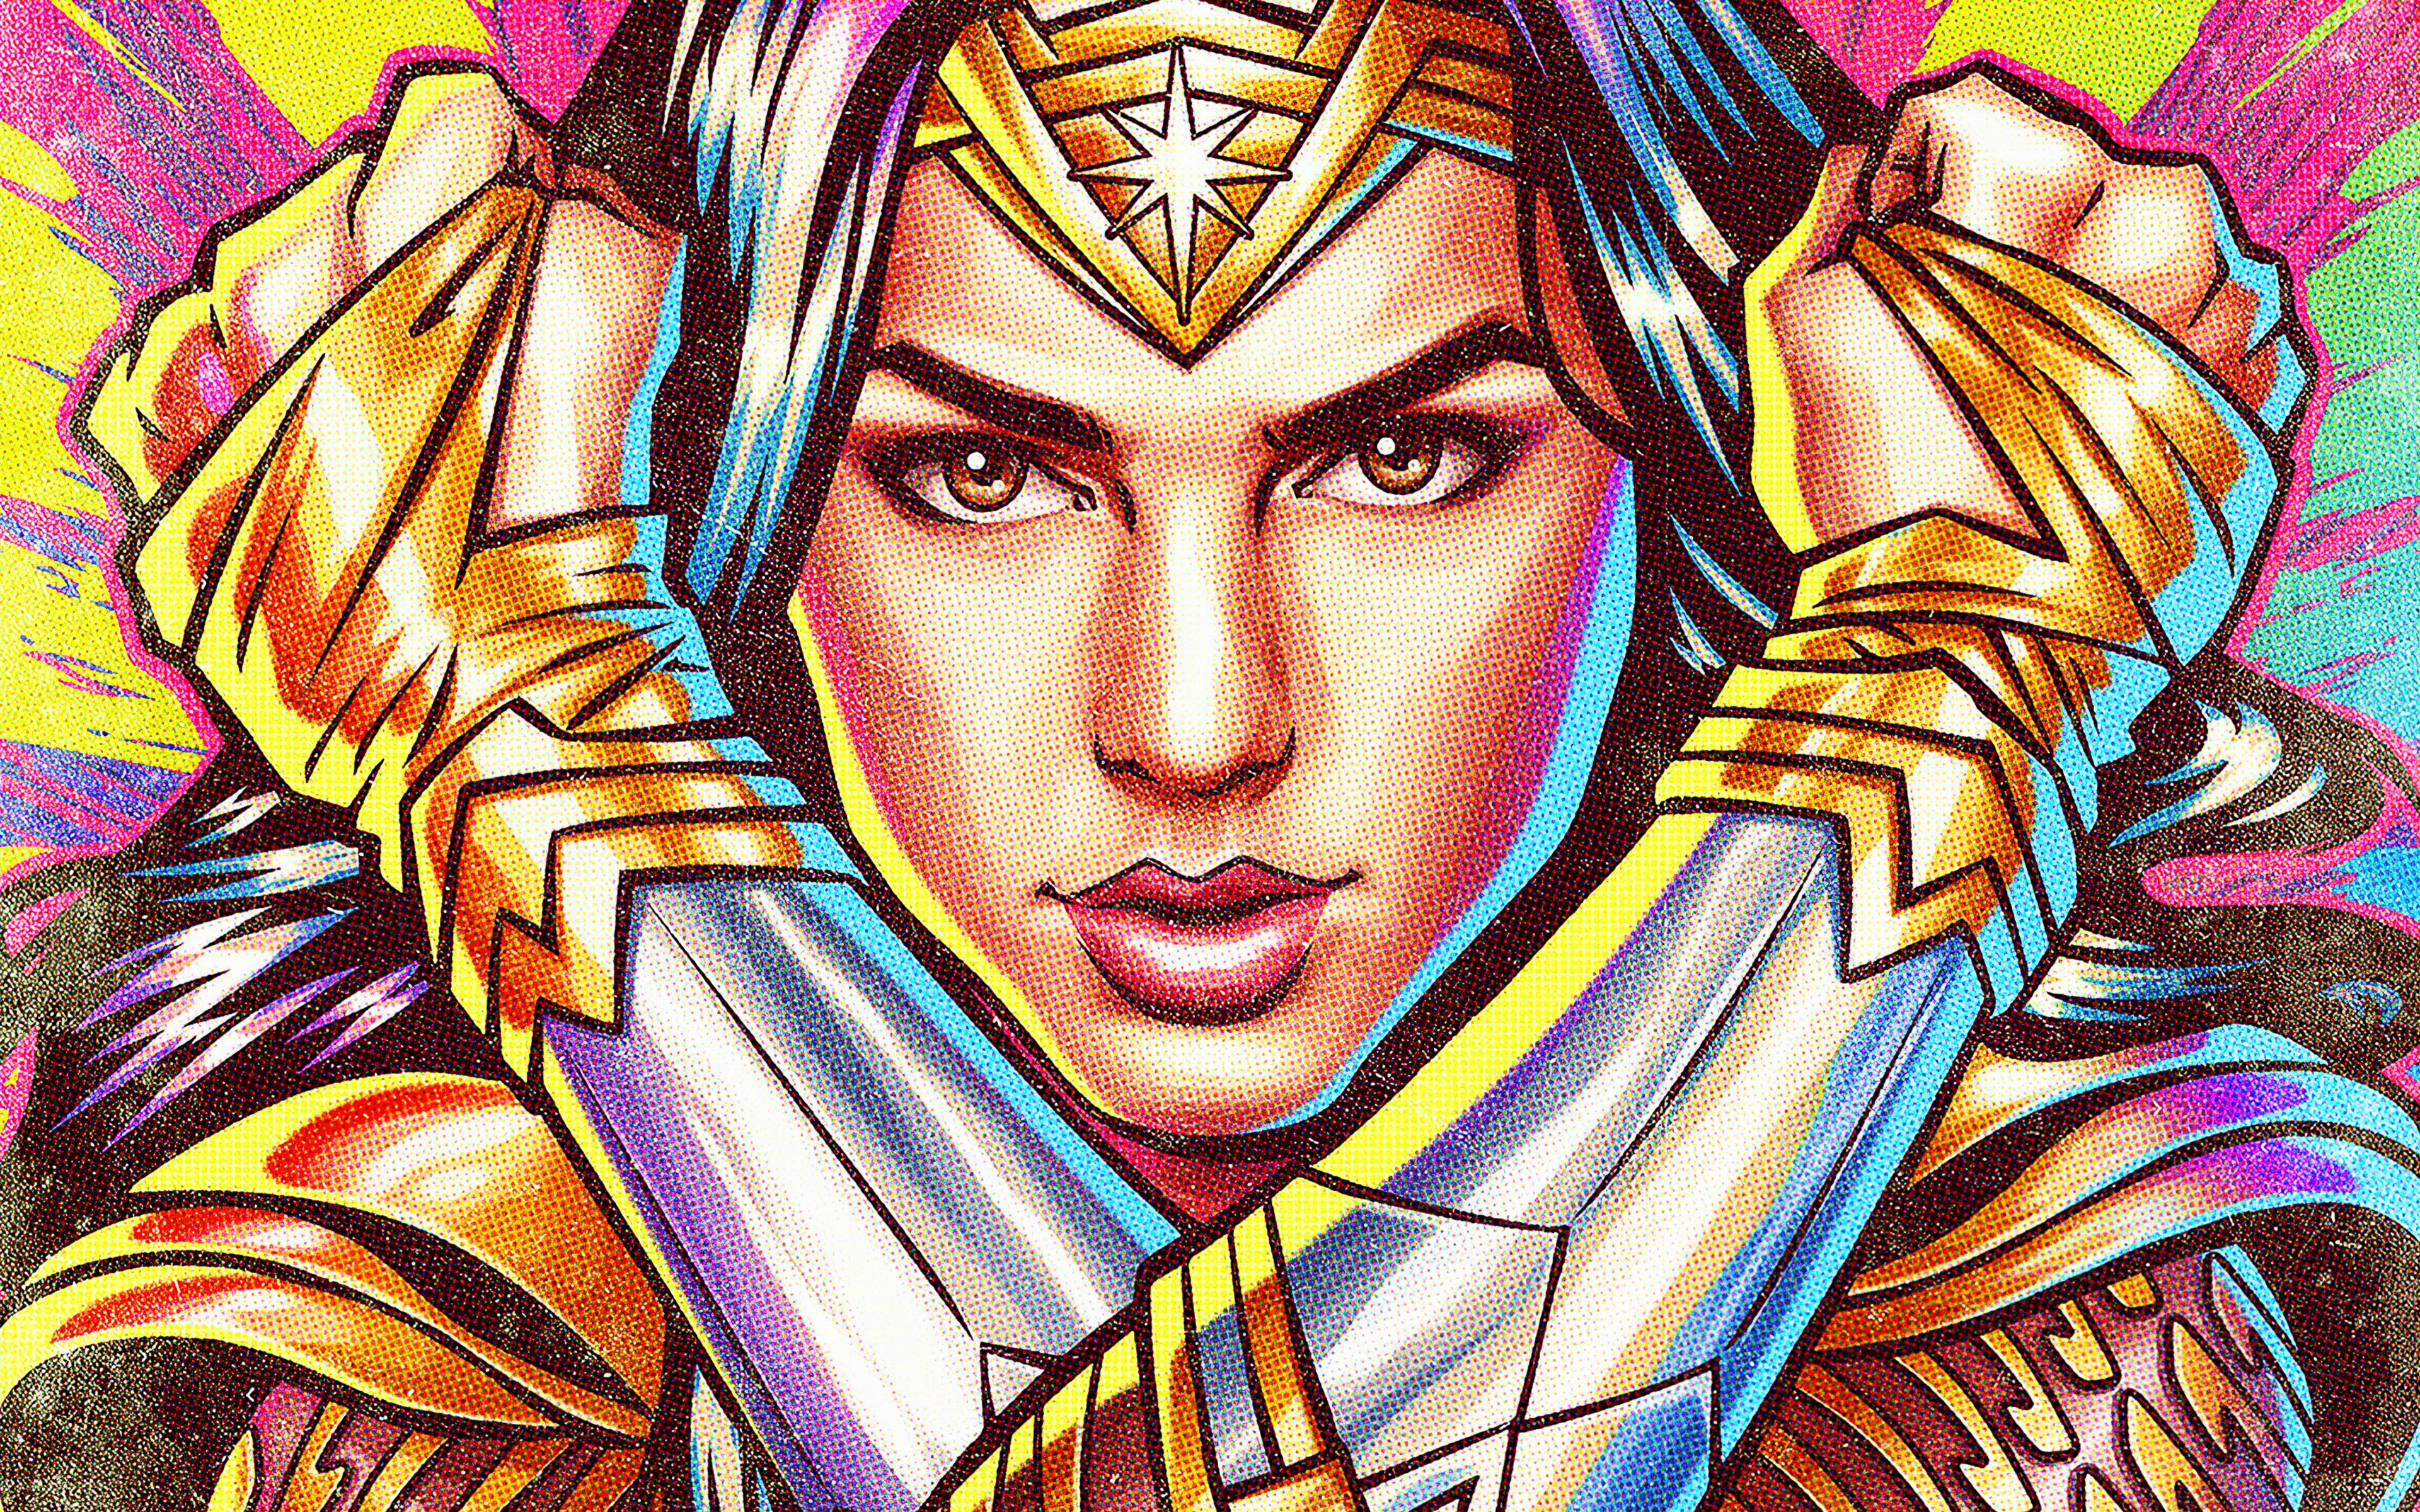 Download wallpapers 4k, The Wonder Woman, abstract art, superheroes, portrait, Cartoon Wonder Woman, Abstract Wonder Woman, artwork, Wonder Woman, DC Comics